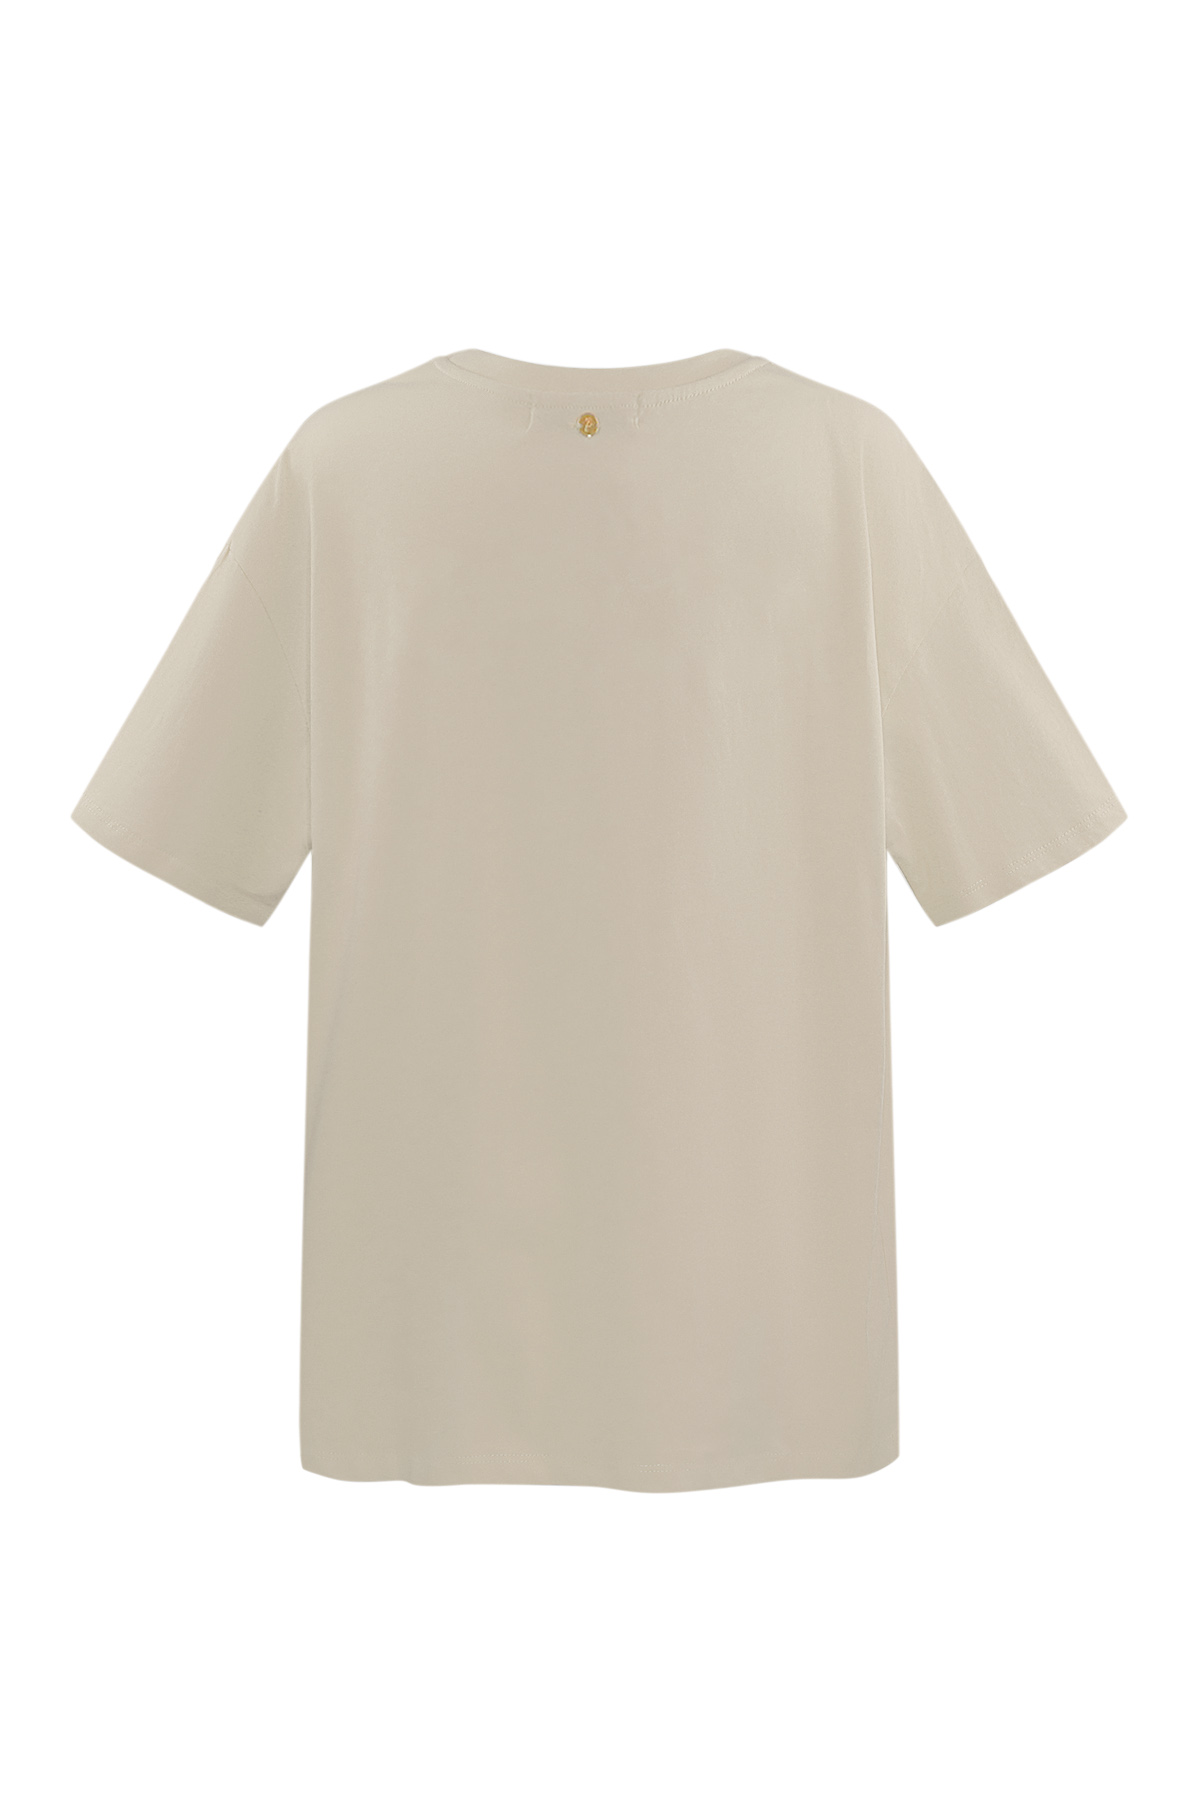 T-Shirt ma perle - beige Bild7